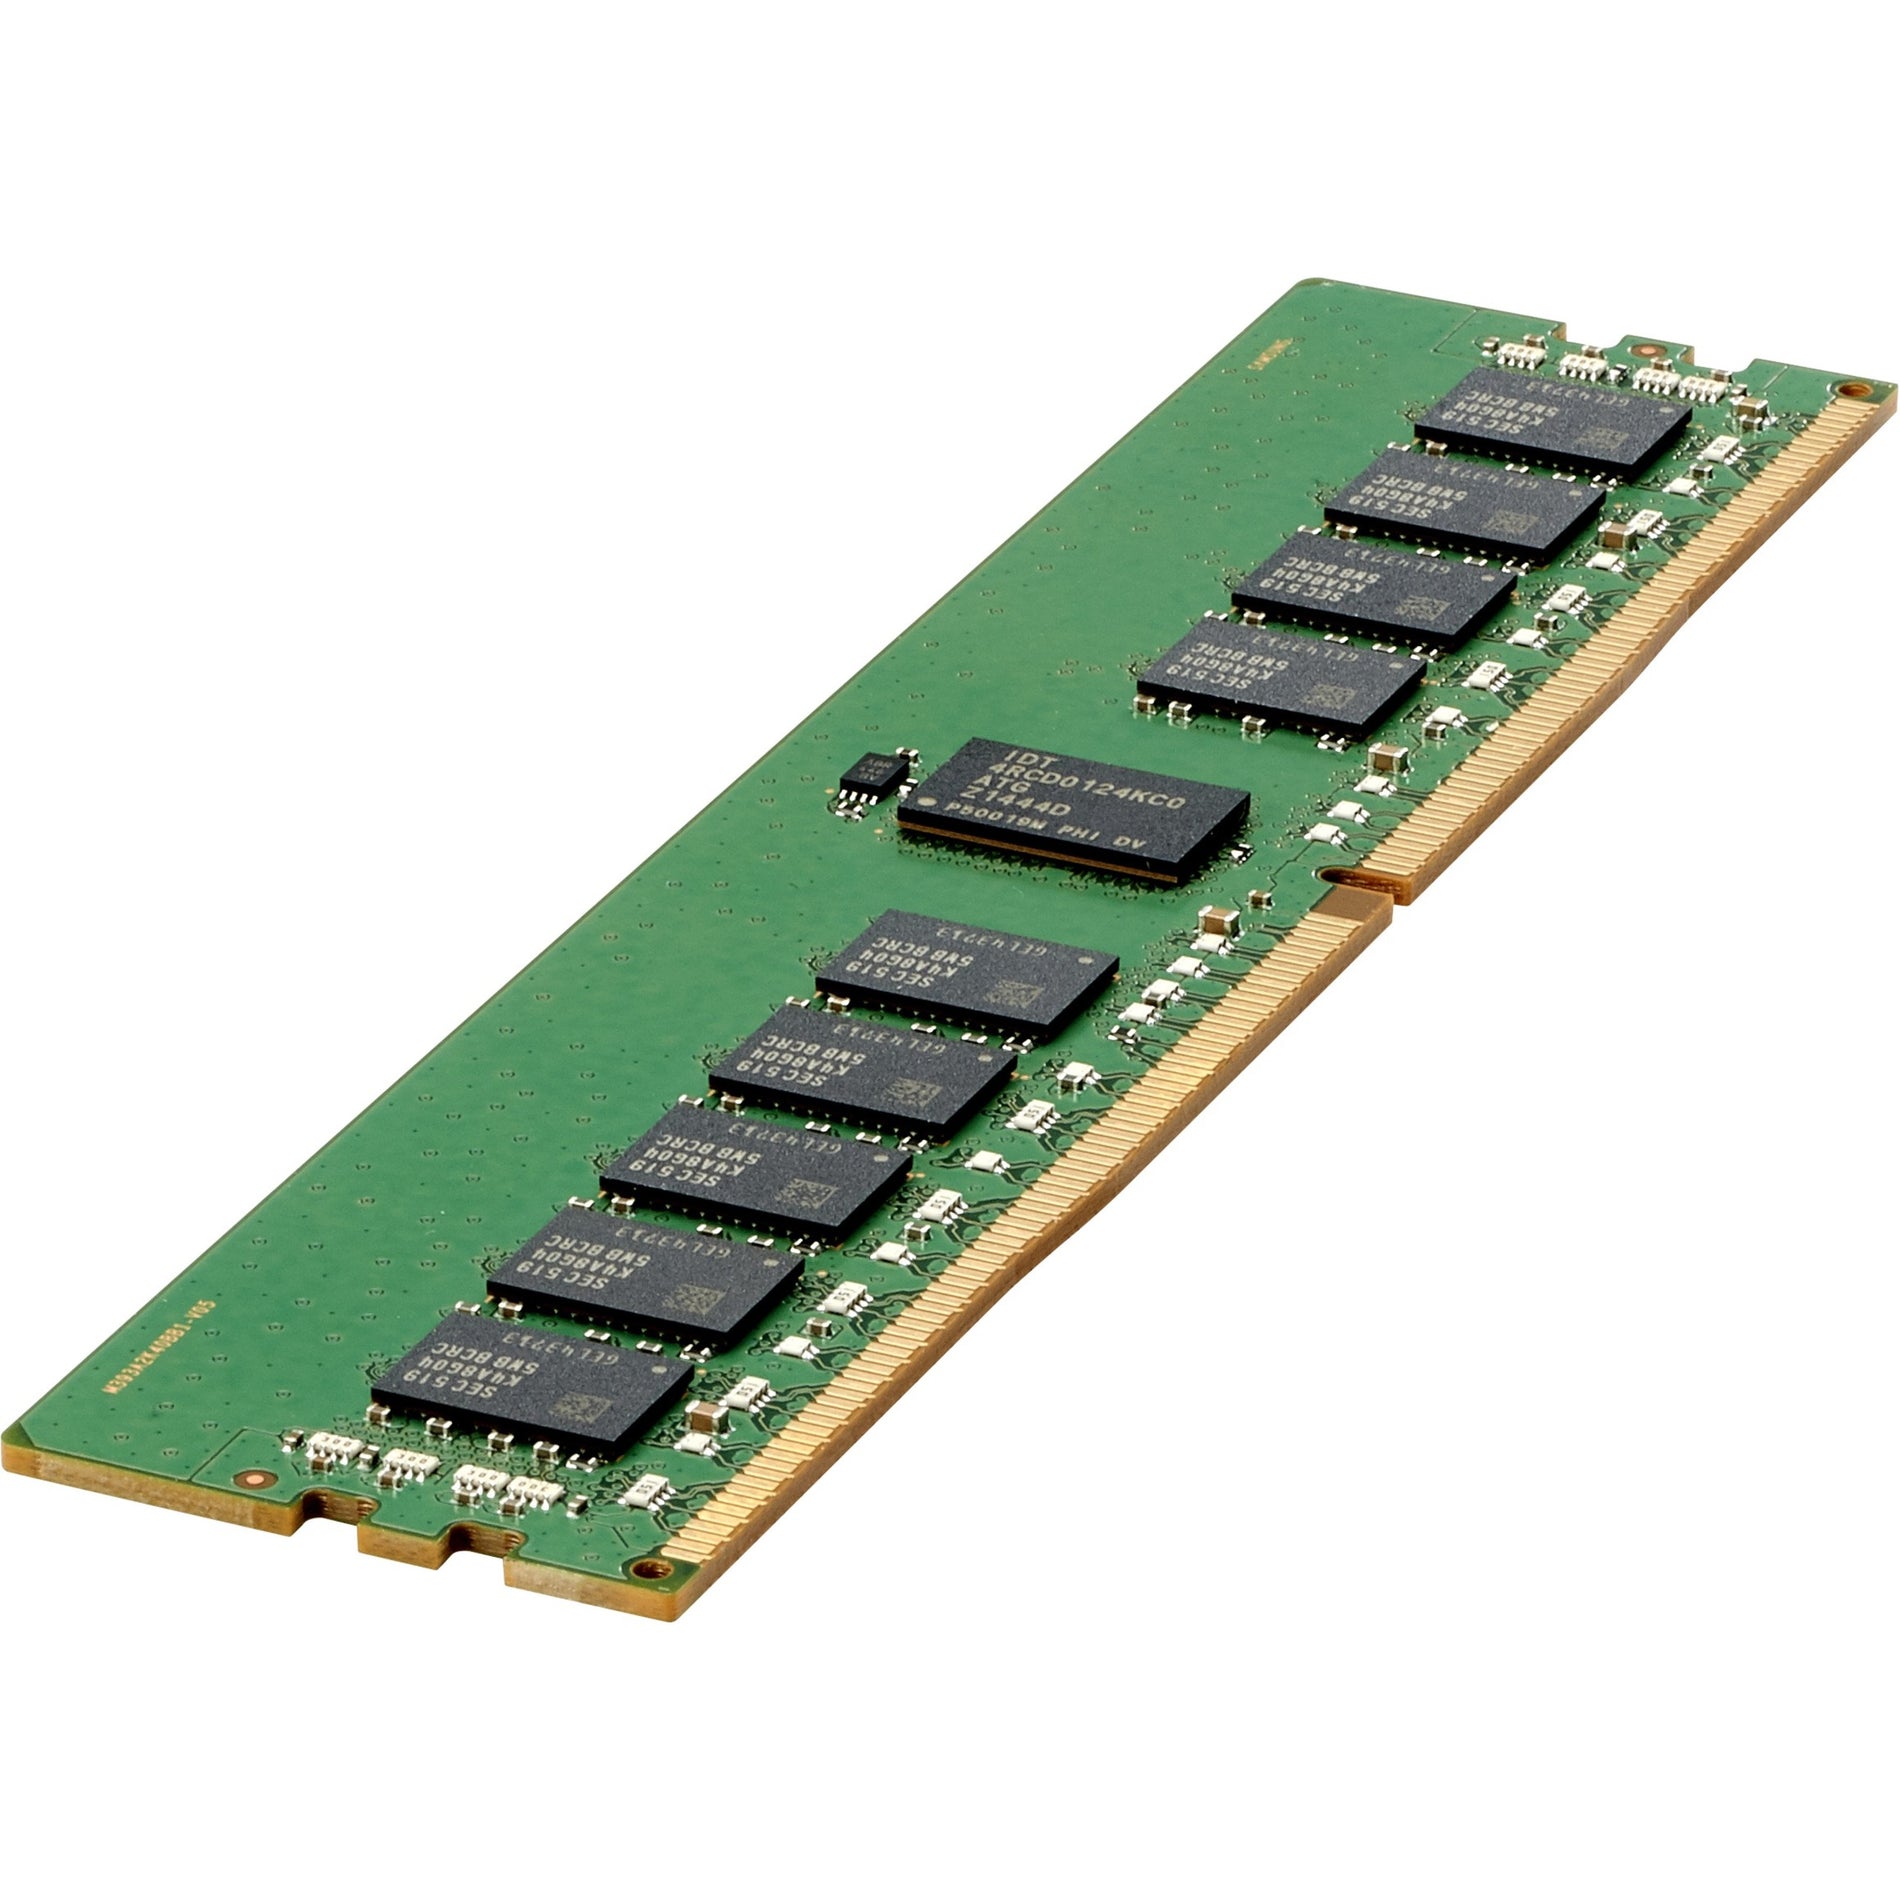 HPE 879507-B21 16GB DDR4 SDRAM Memory Module, High Performance RAM for HPE Servers